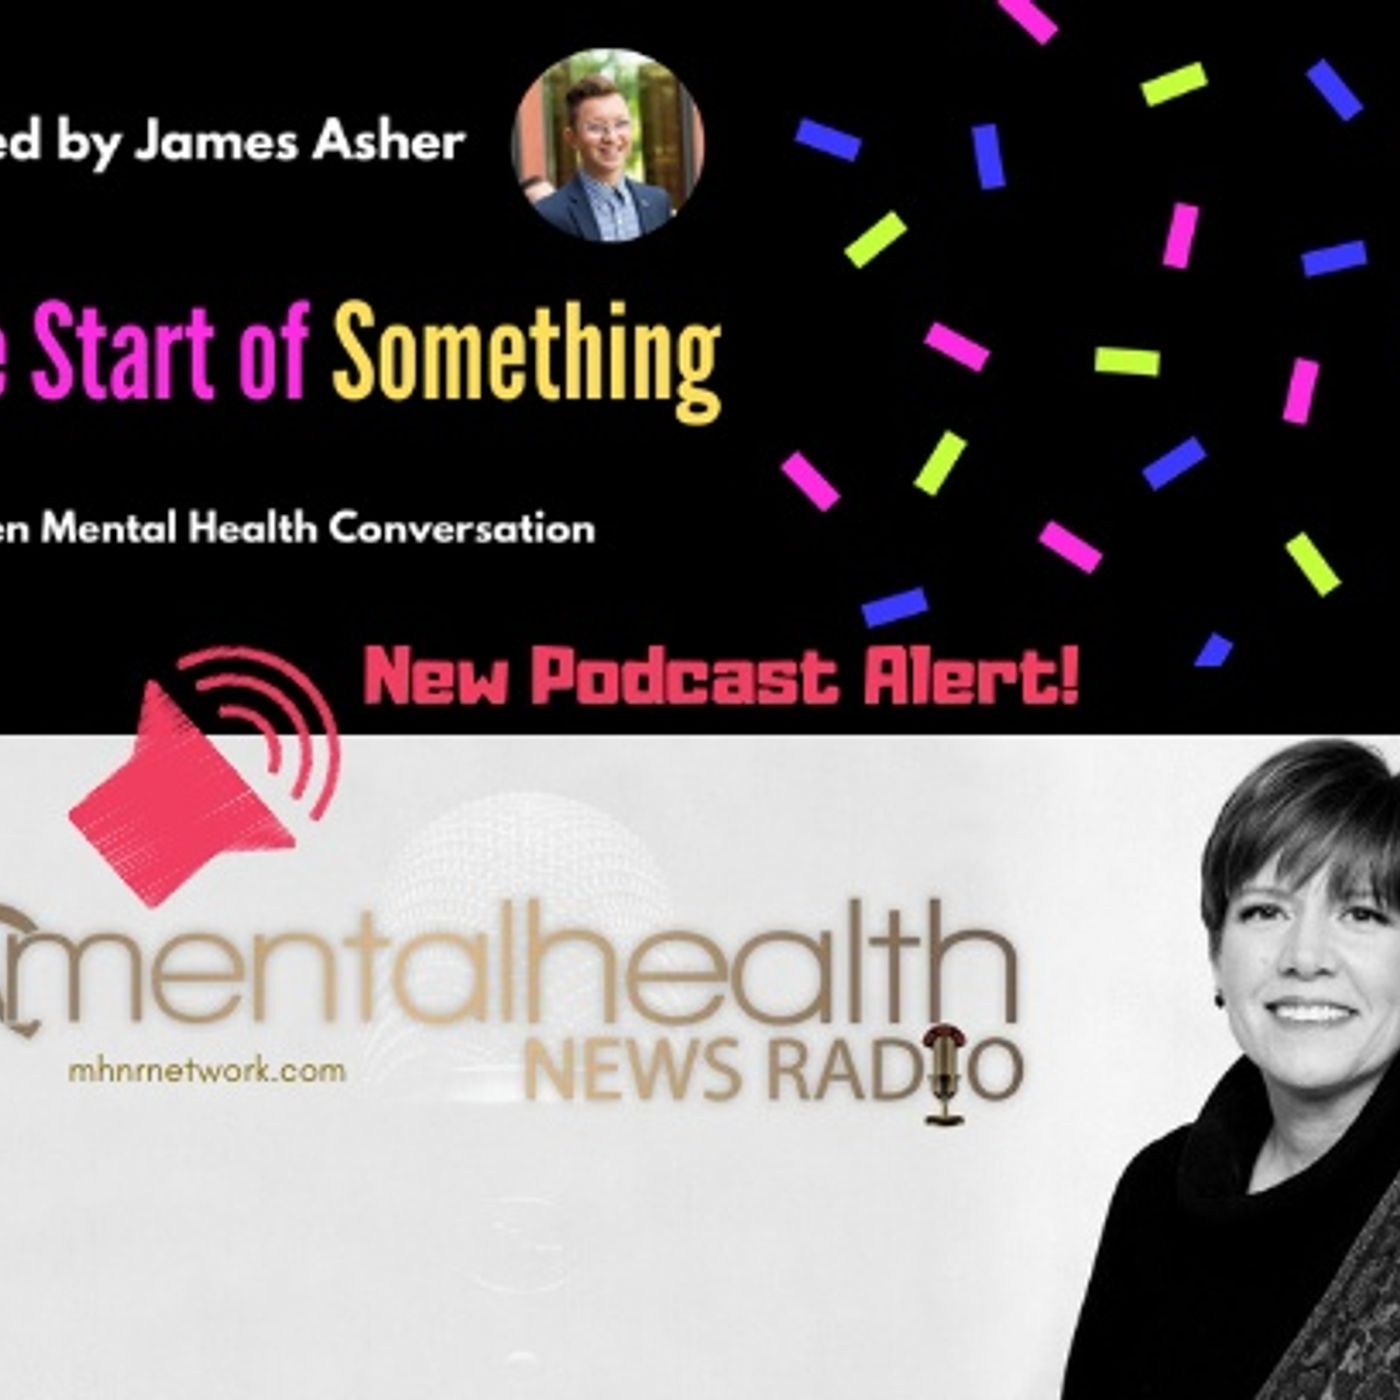 Mental Health News Radio - The Start of Something